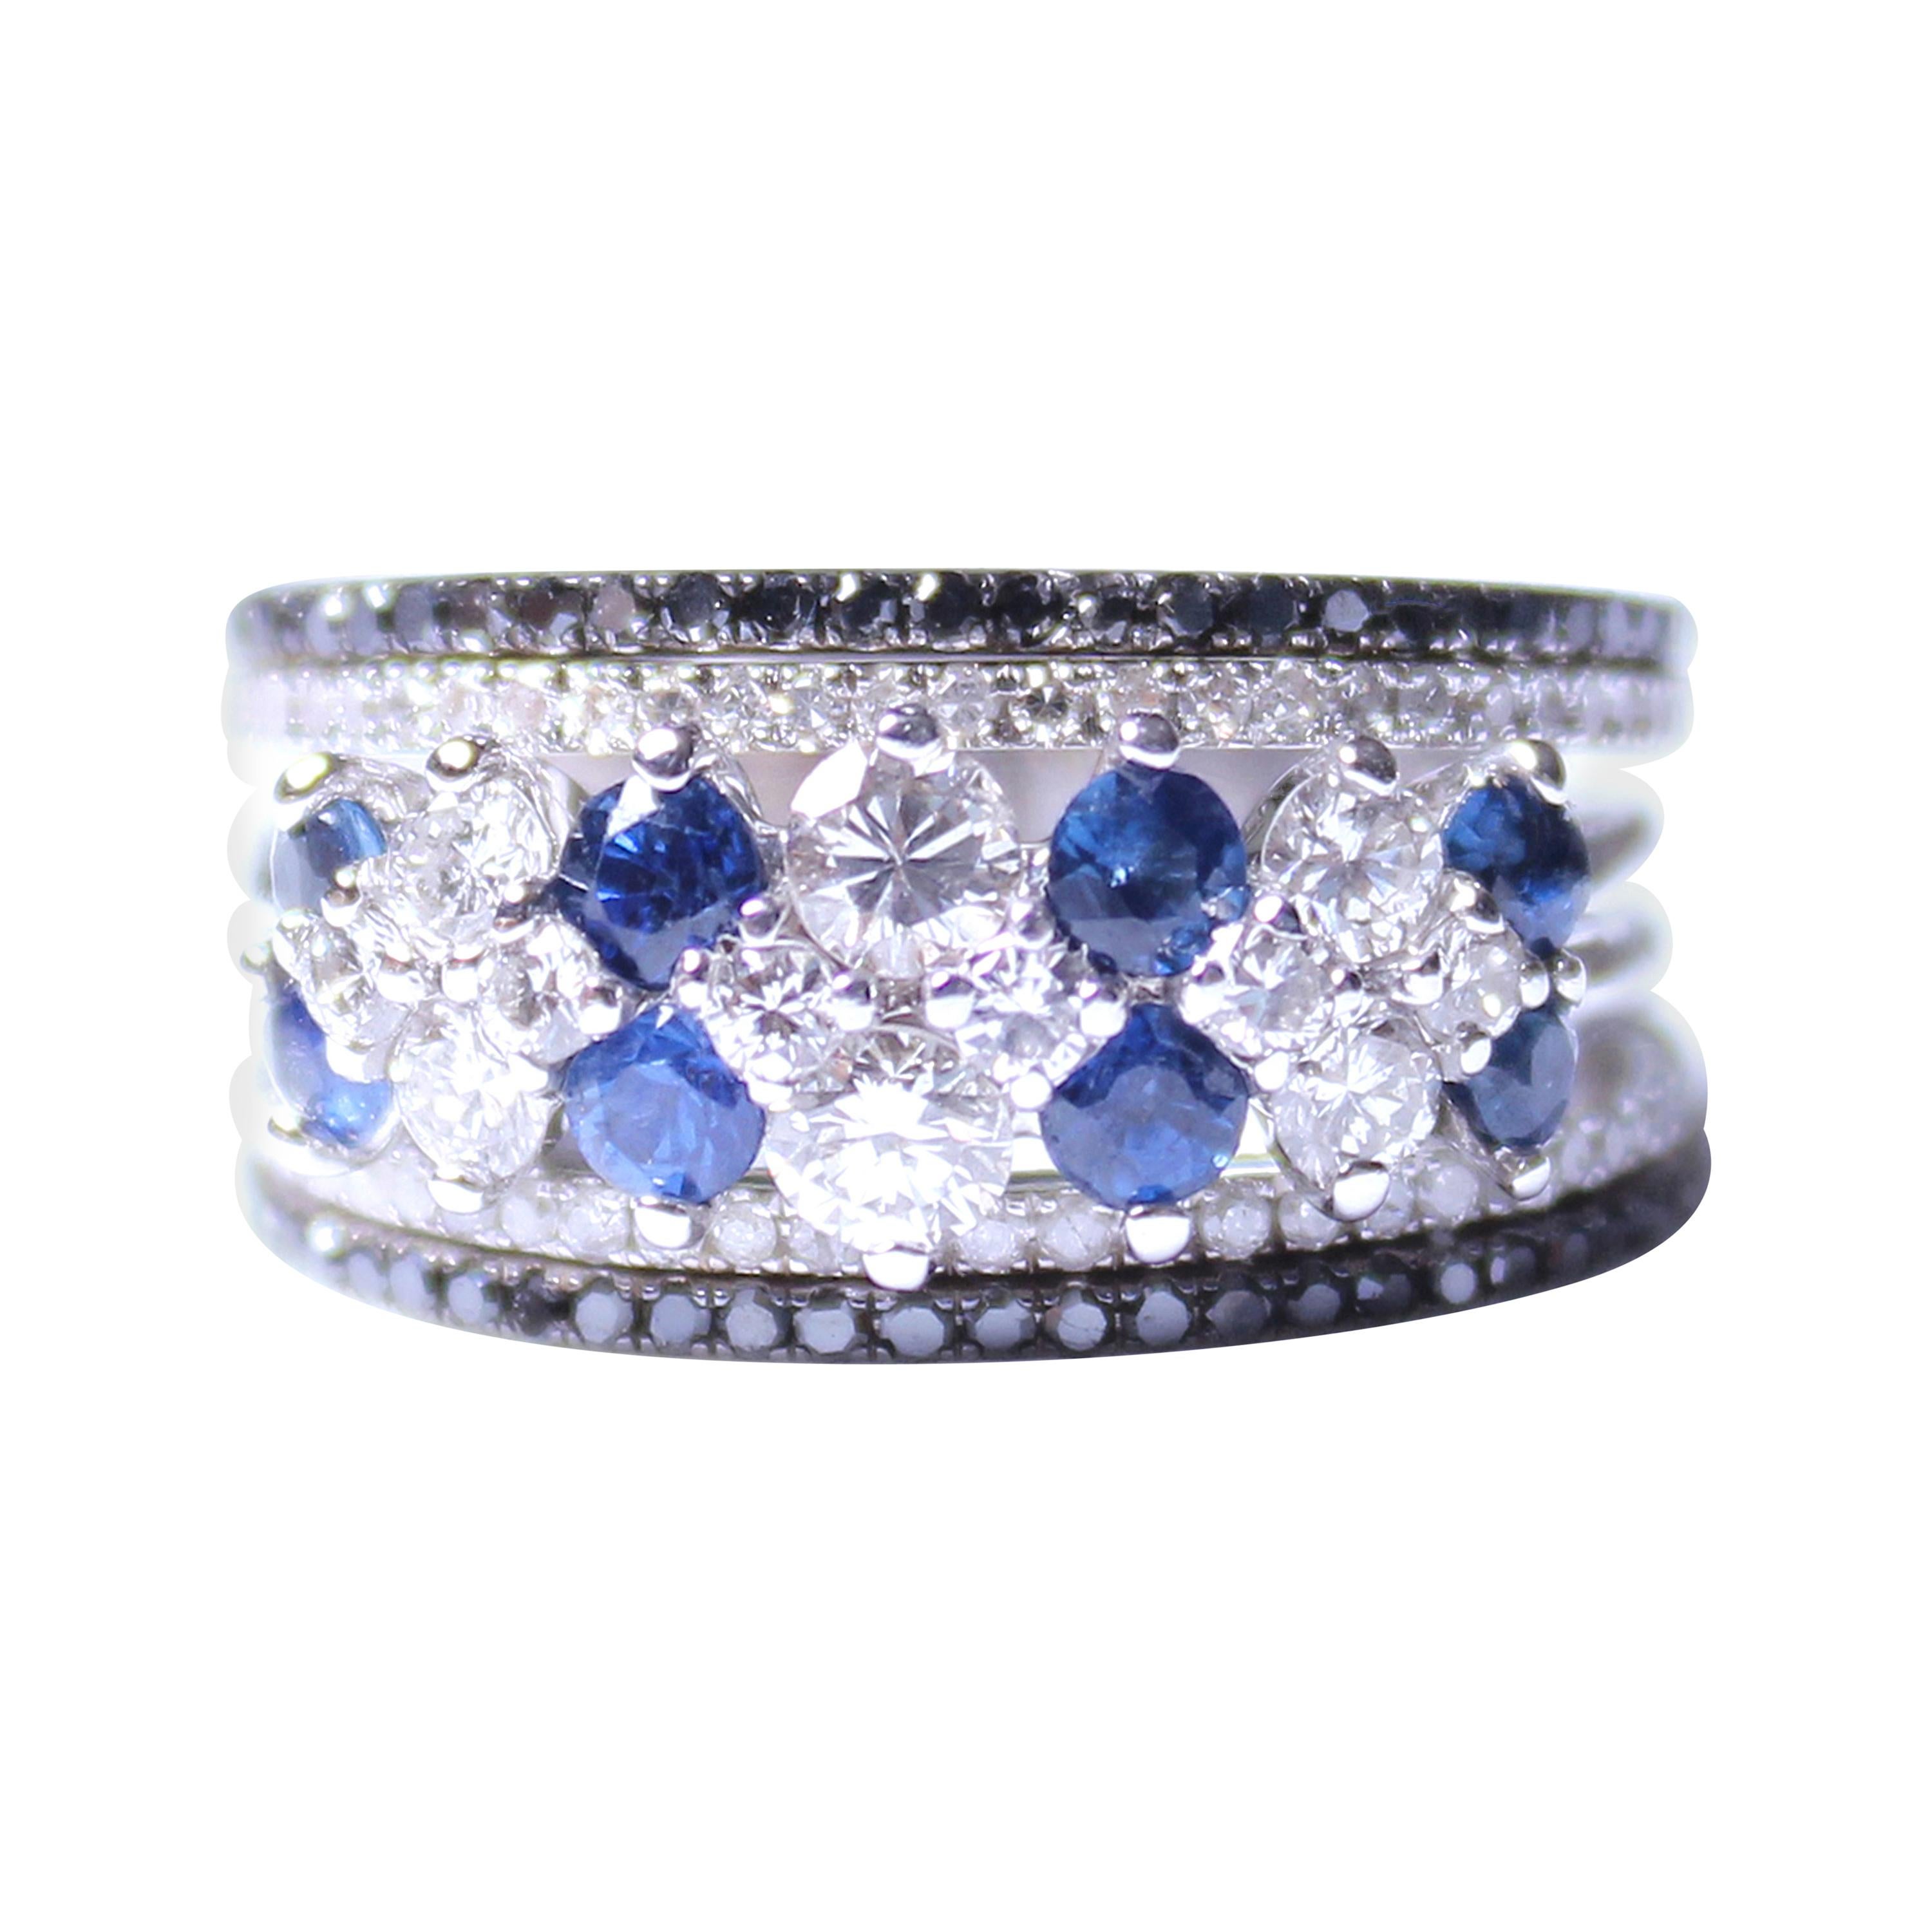 Clarissa Bronfman Sapphire White and Black 5 Tier Diamond Ring